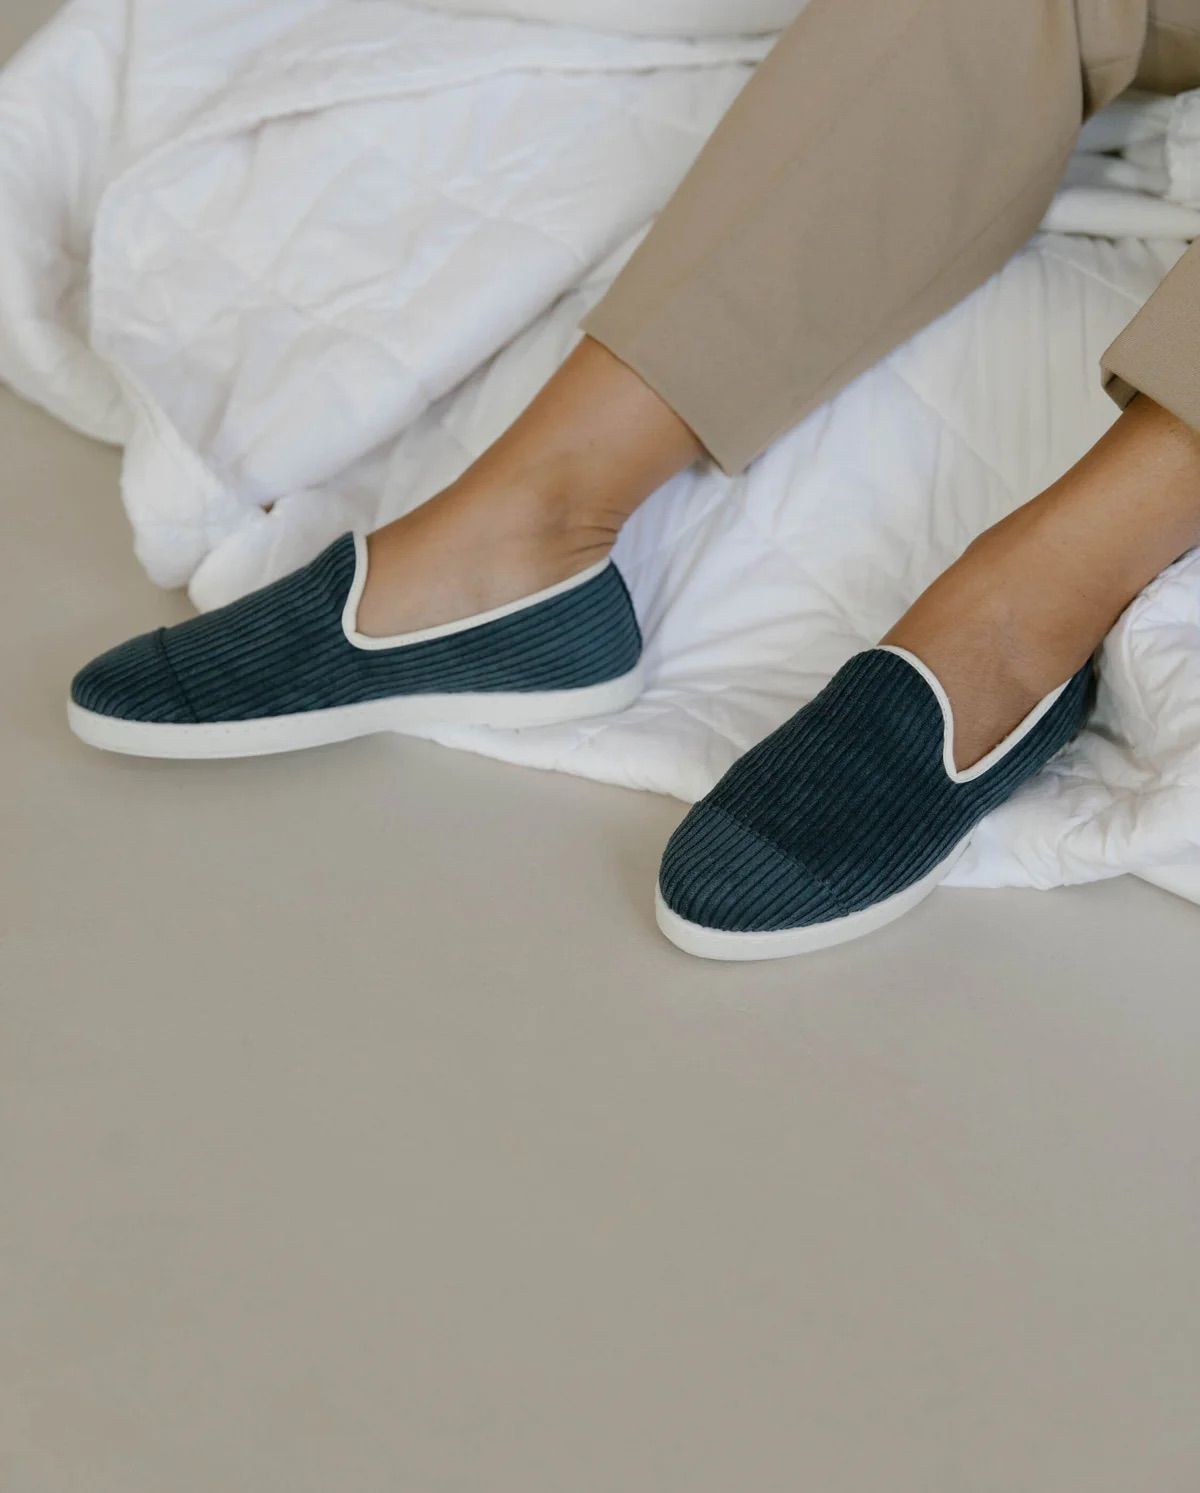 Plain corduroy fur slippers - Angarde